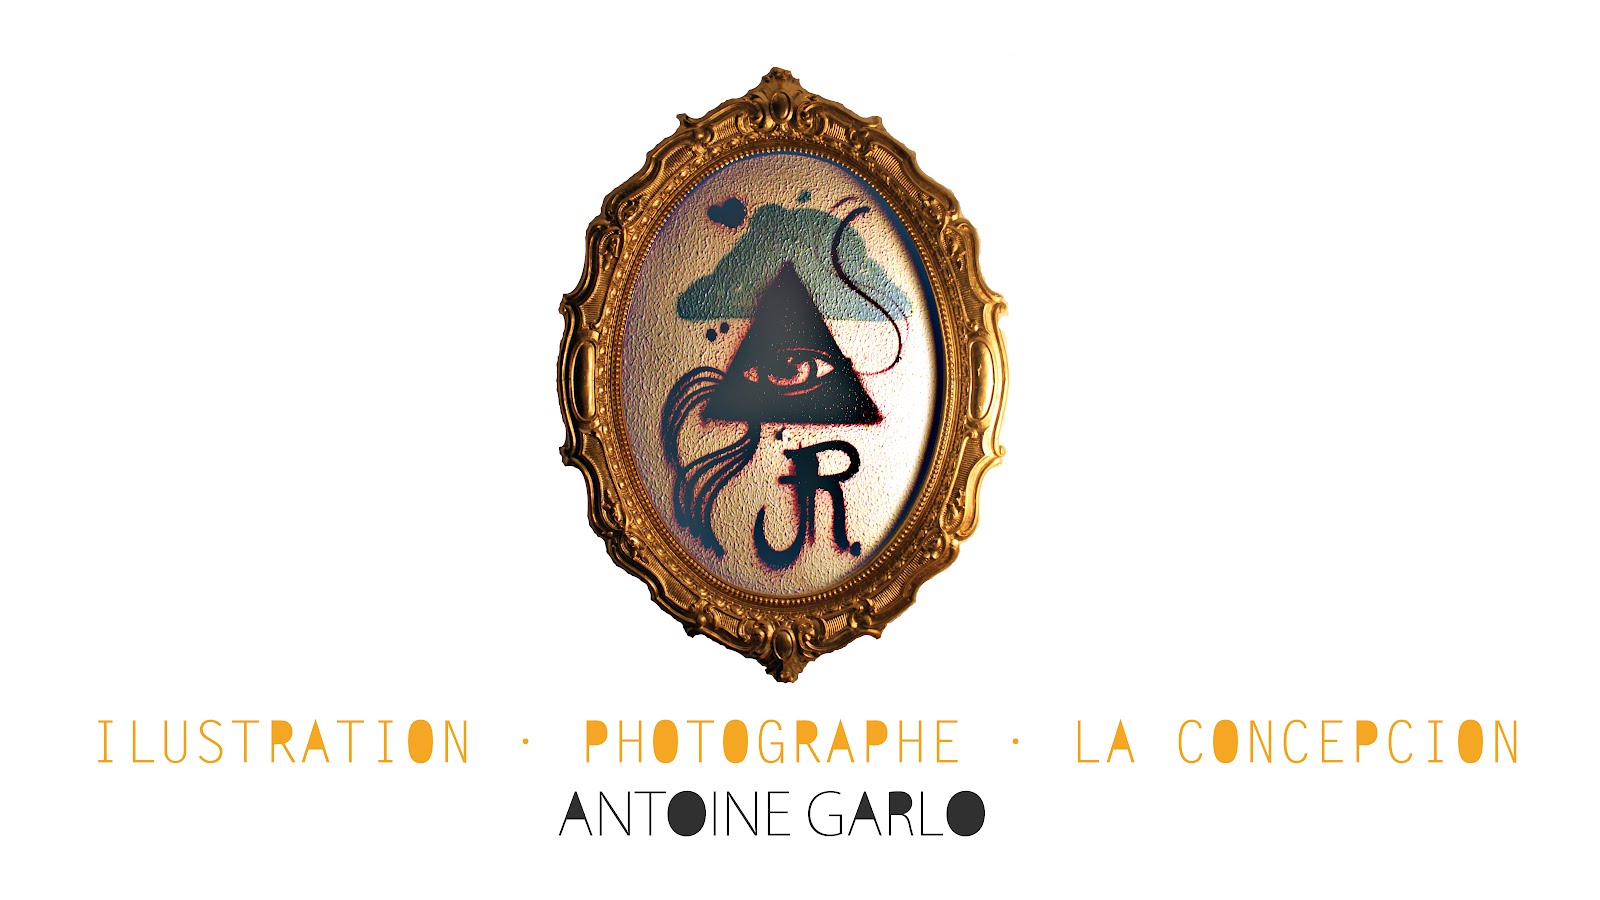 Antoine Garlo